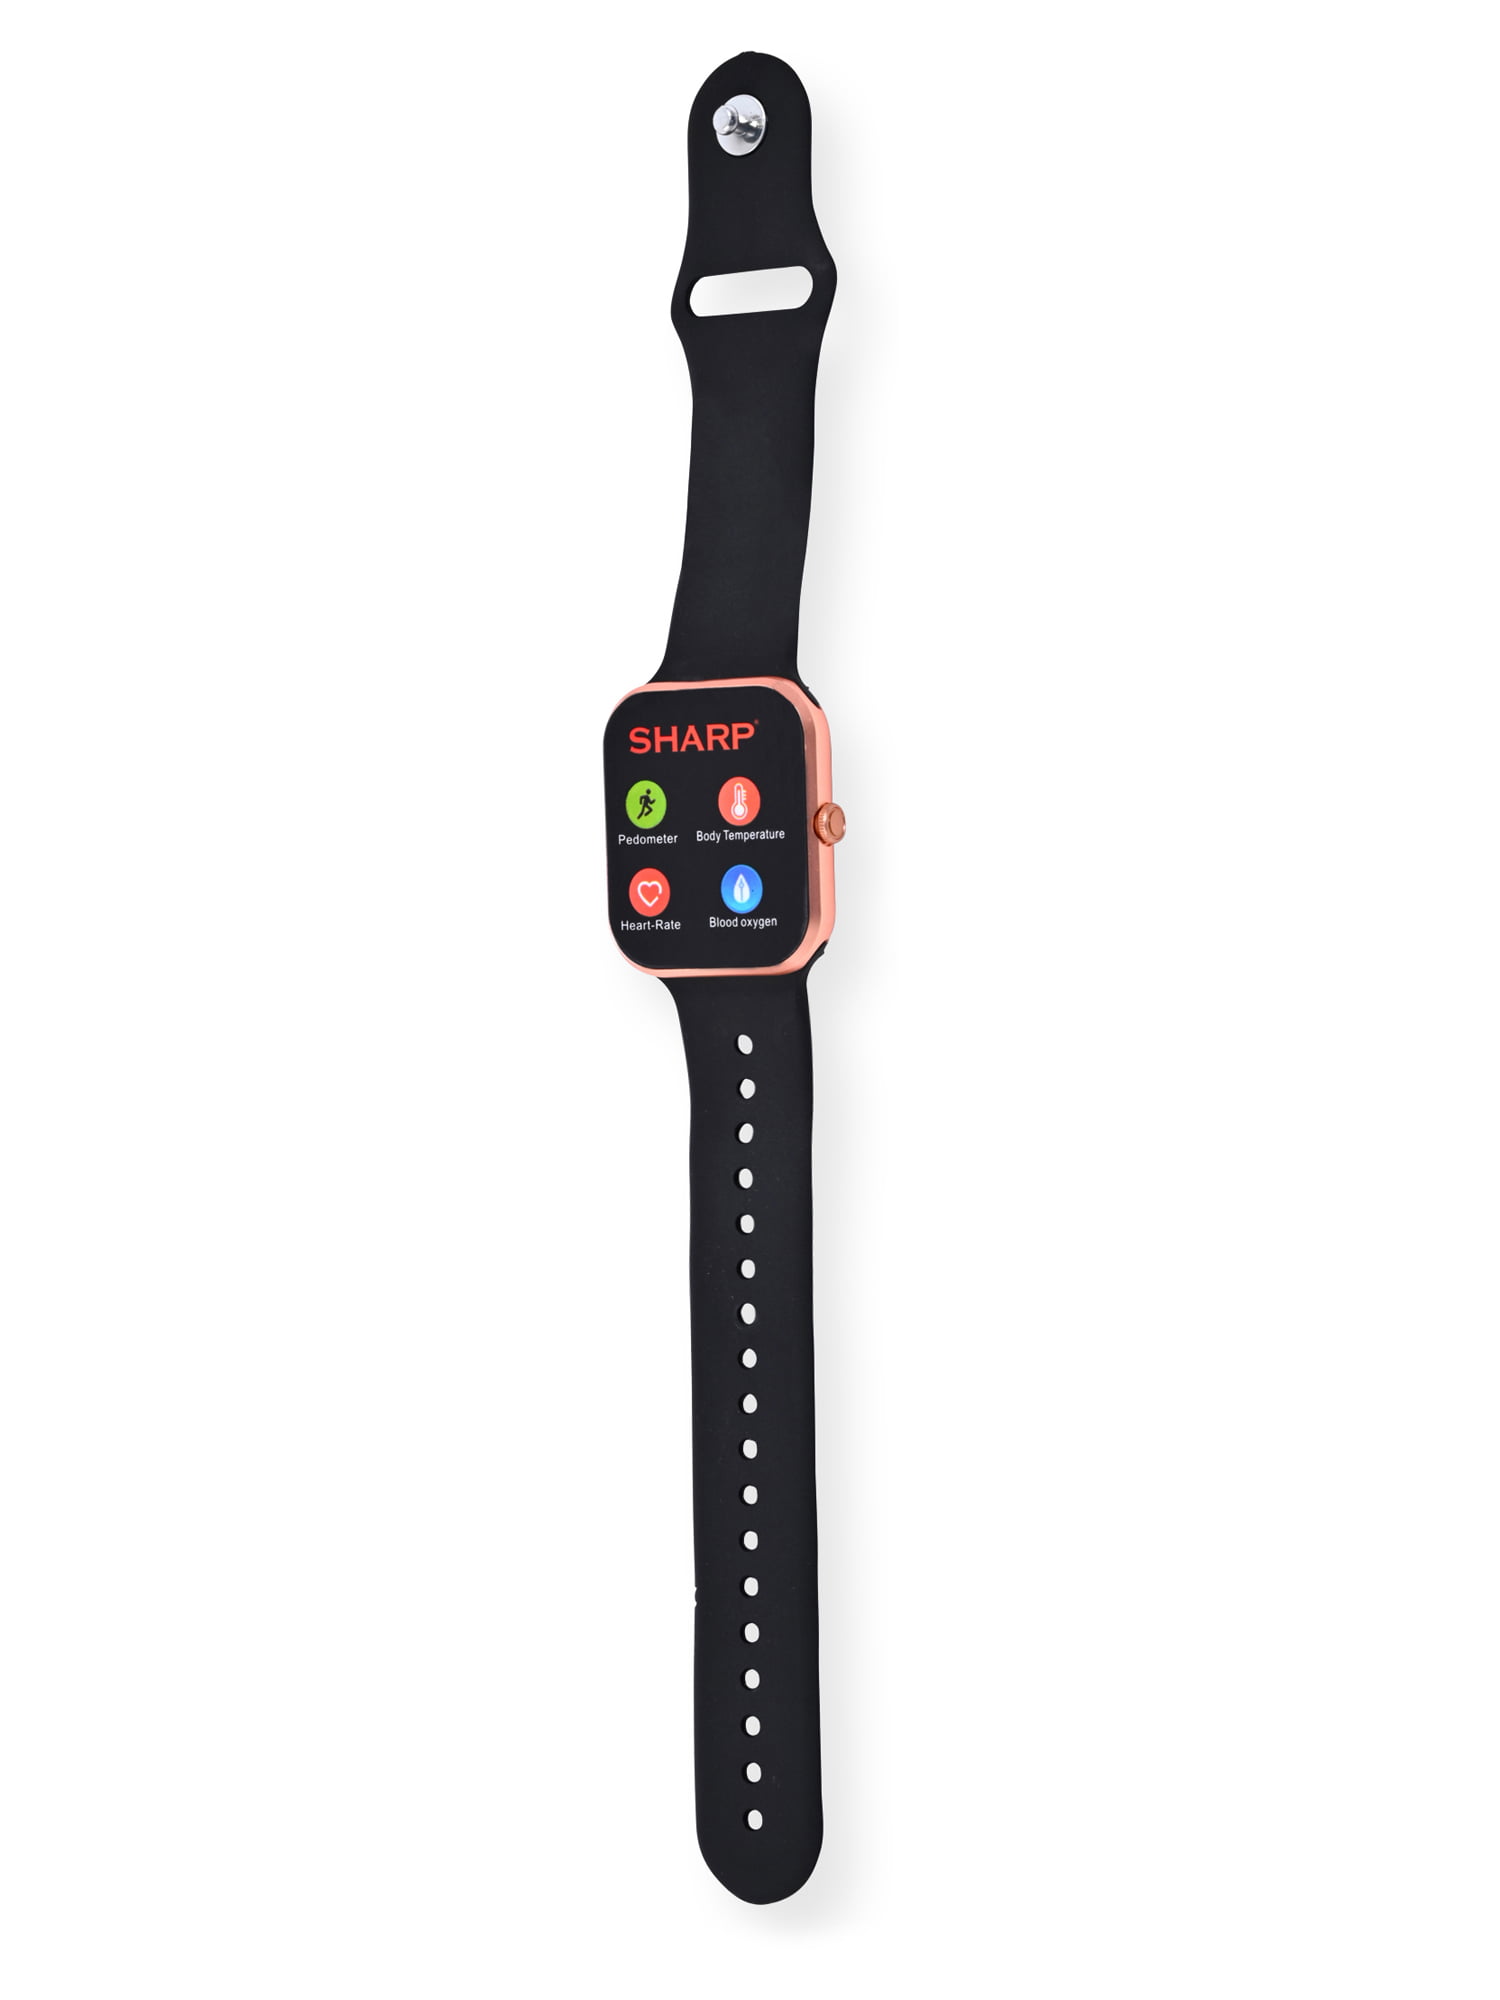 Sharp Smartwatch in Rose Gold with Black Strap - SHR9090RBKWM 